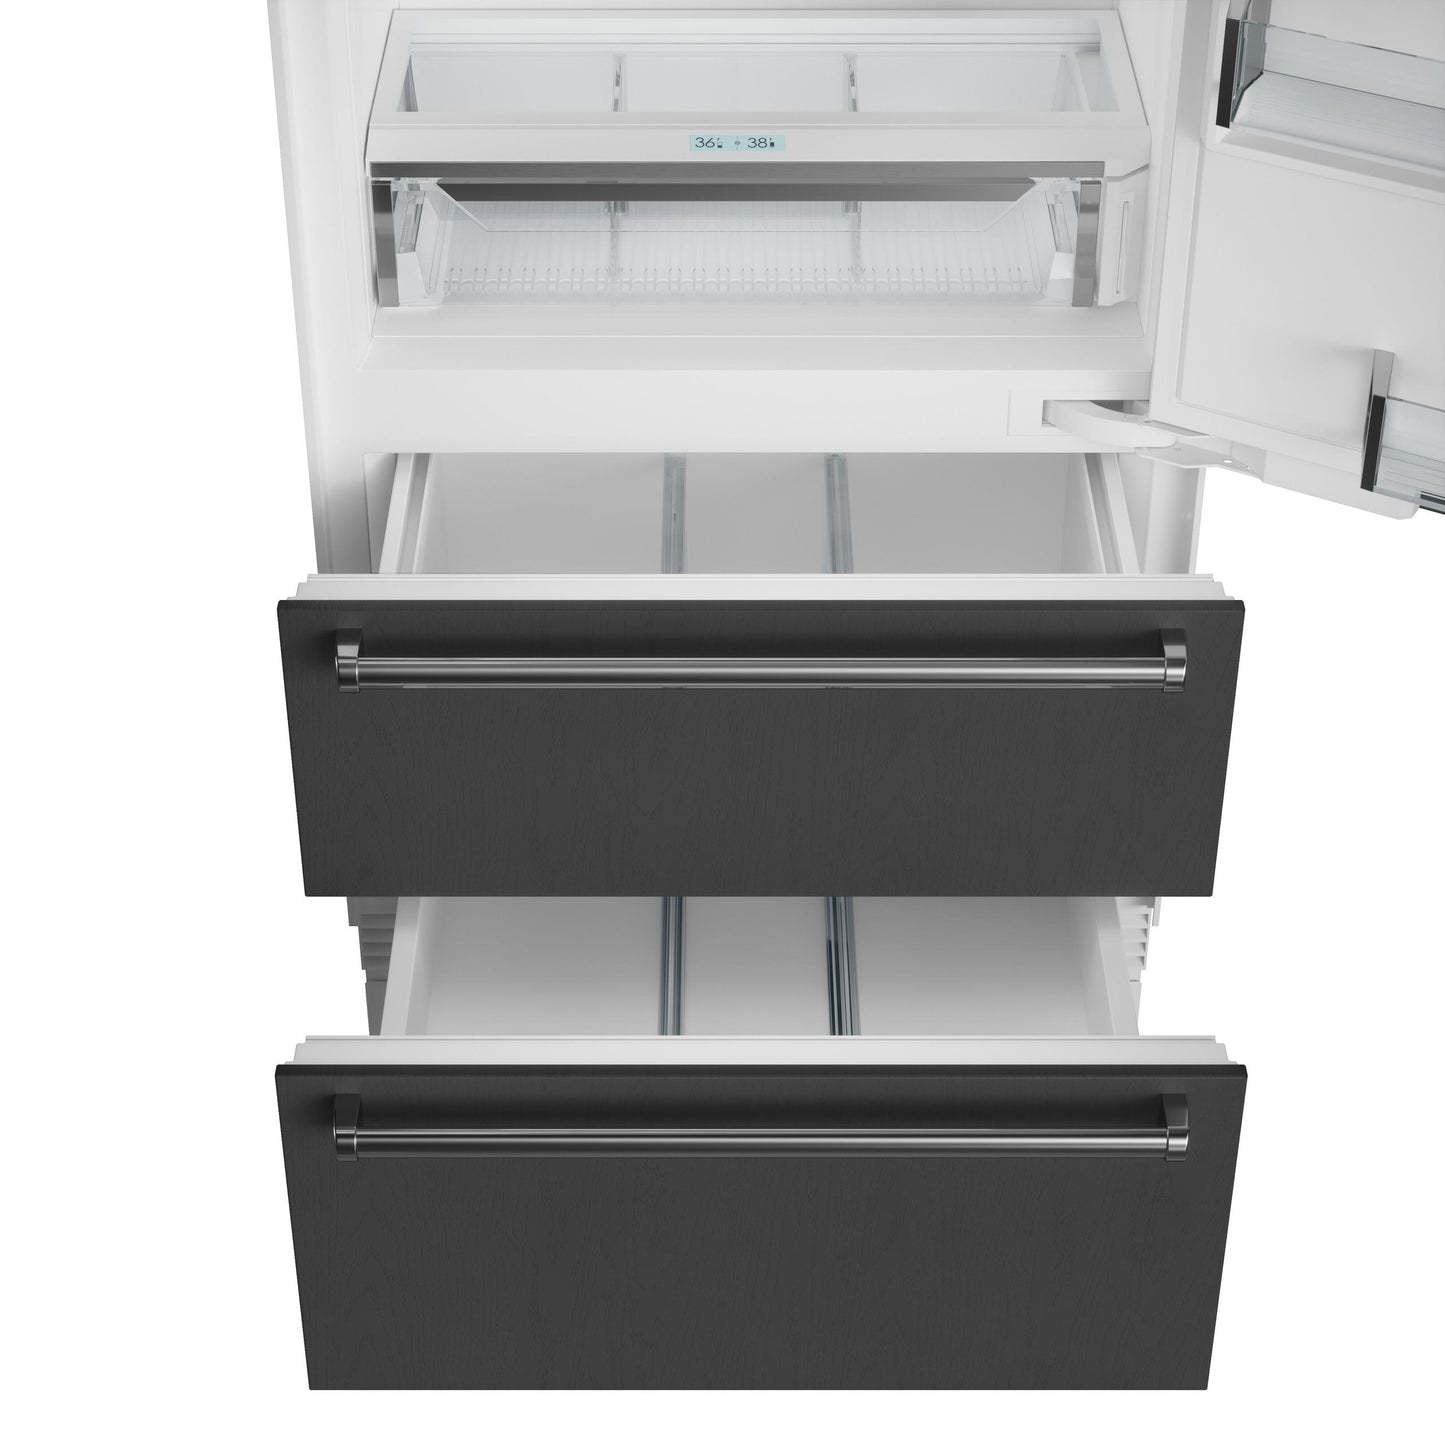 Sub-Zero DET3650RR 36" Designer Over-And-Under Refrigerator - Panel Ready